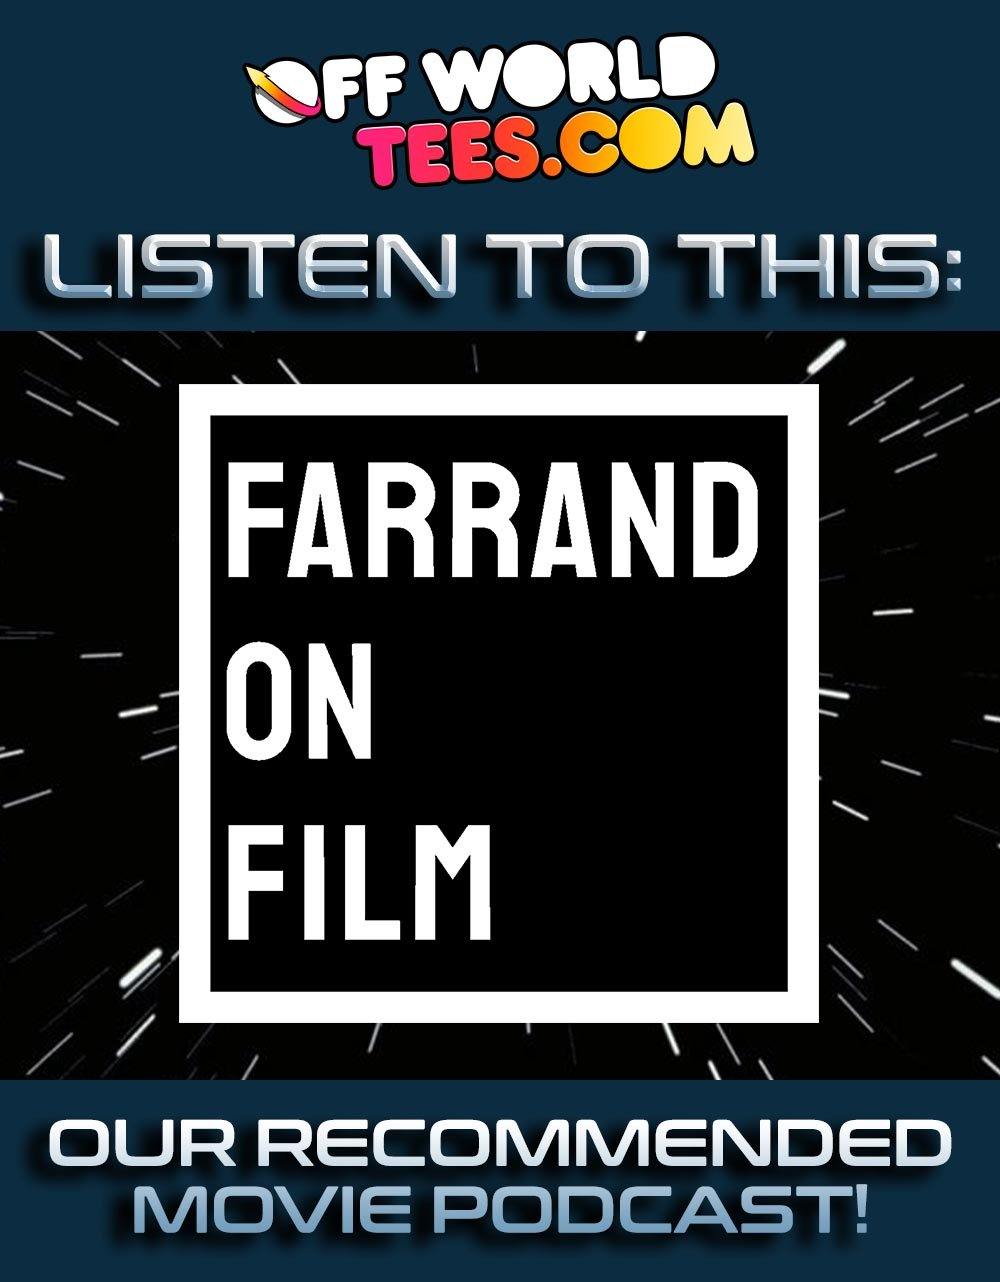 Farrand On Film - Off World Tees